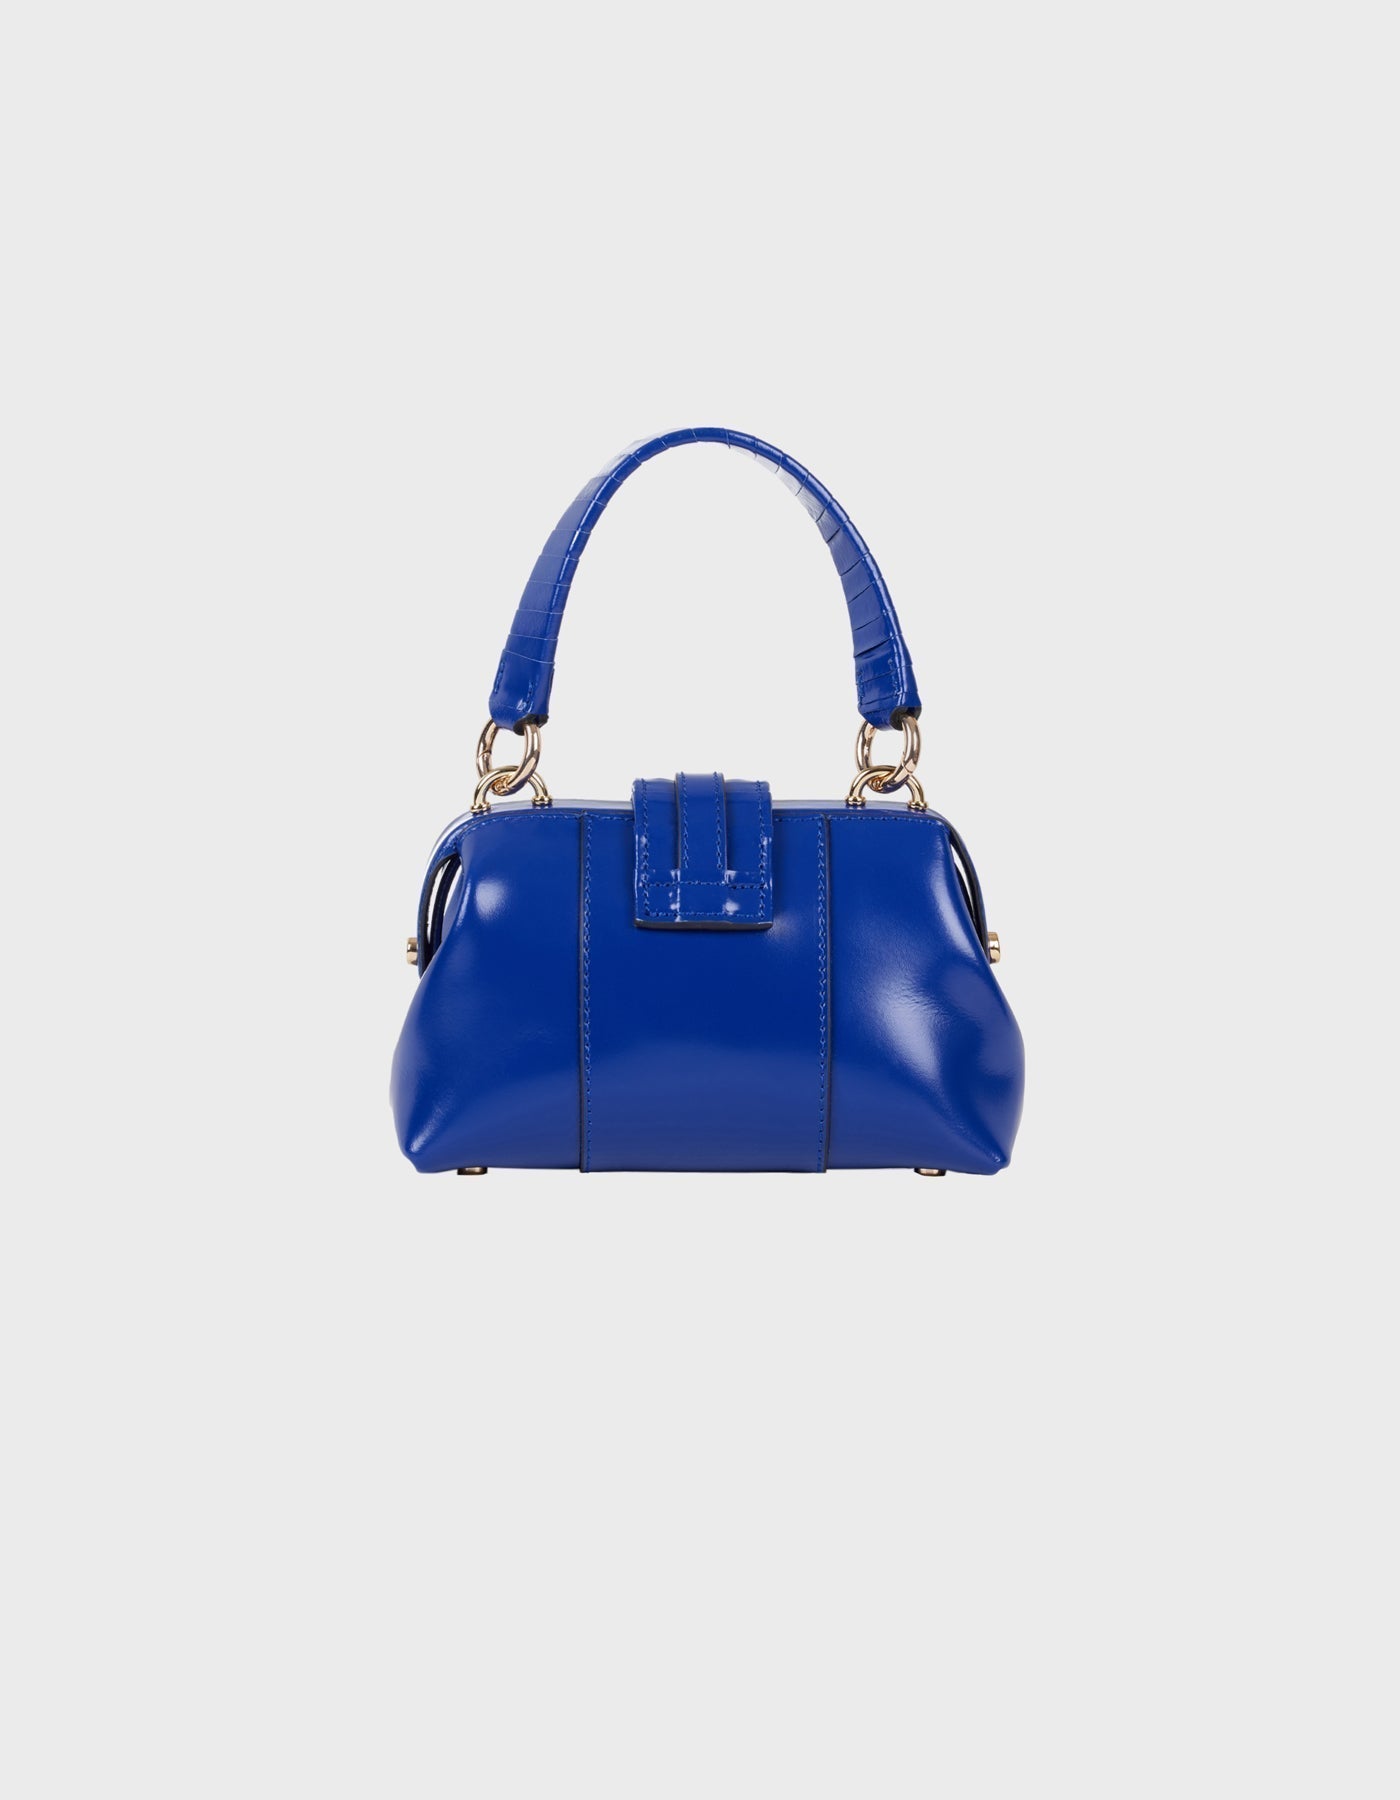 HiVa Atelier | Mini Nubes Doctor Bag Sodalite Blue | Beautiful and Versatile Leather Accessories